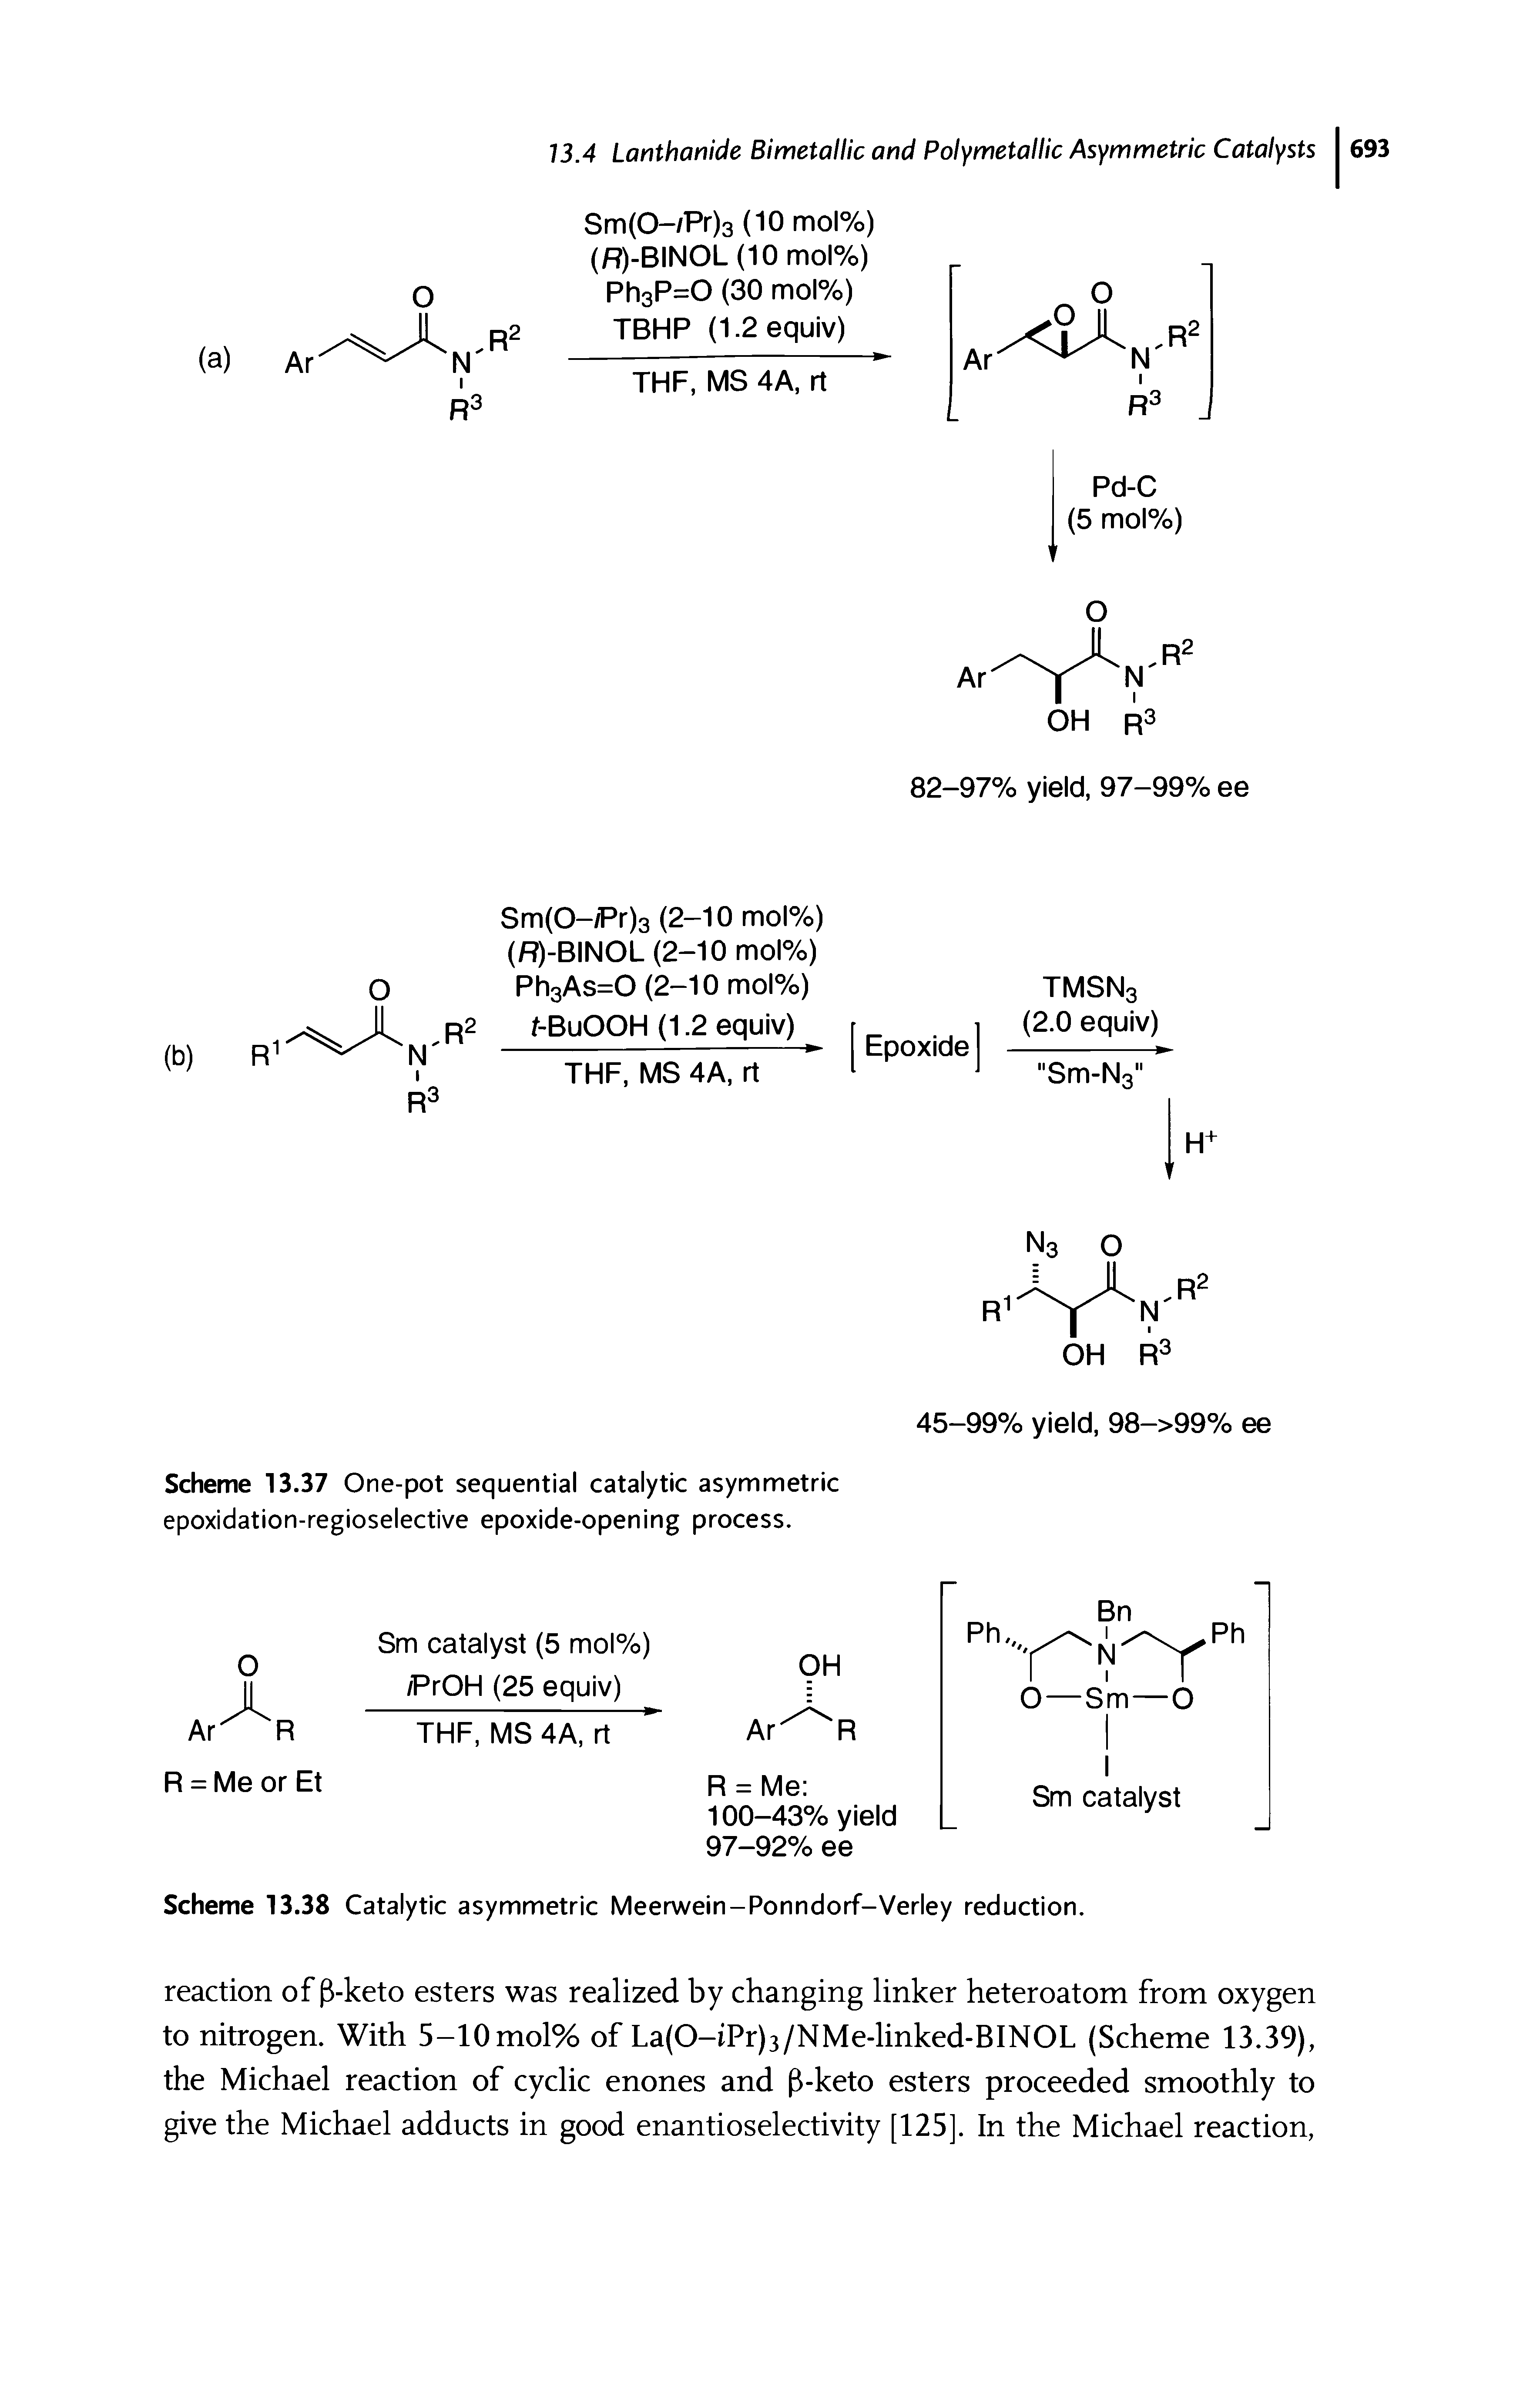 Scheme 13.37 One-pot sequential catalytic asymmetric epoxicdation-regioselective epoxide-opening process.